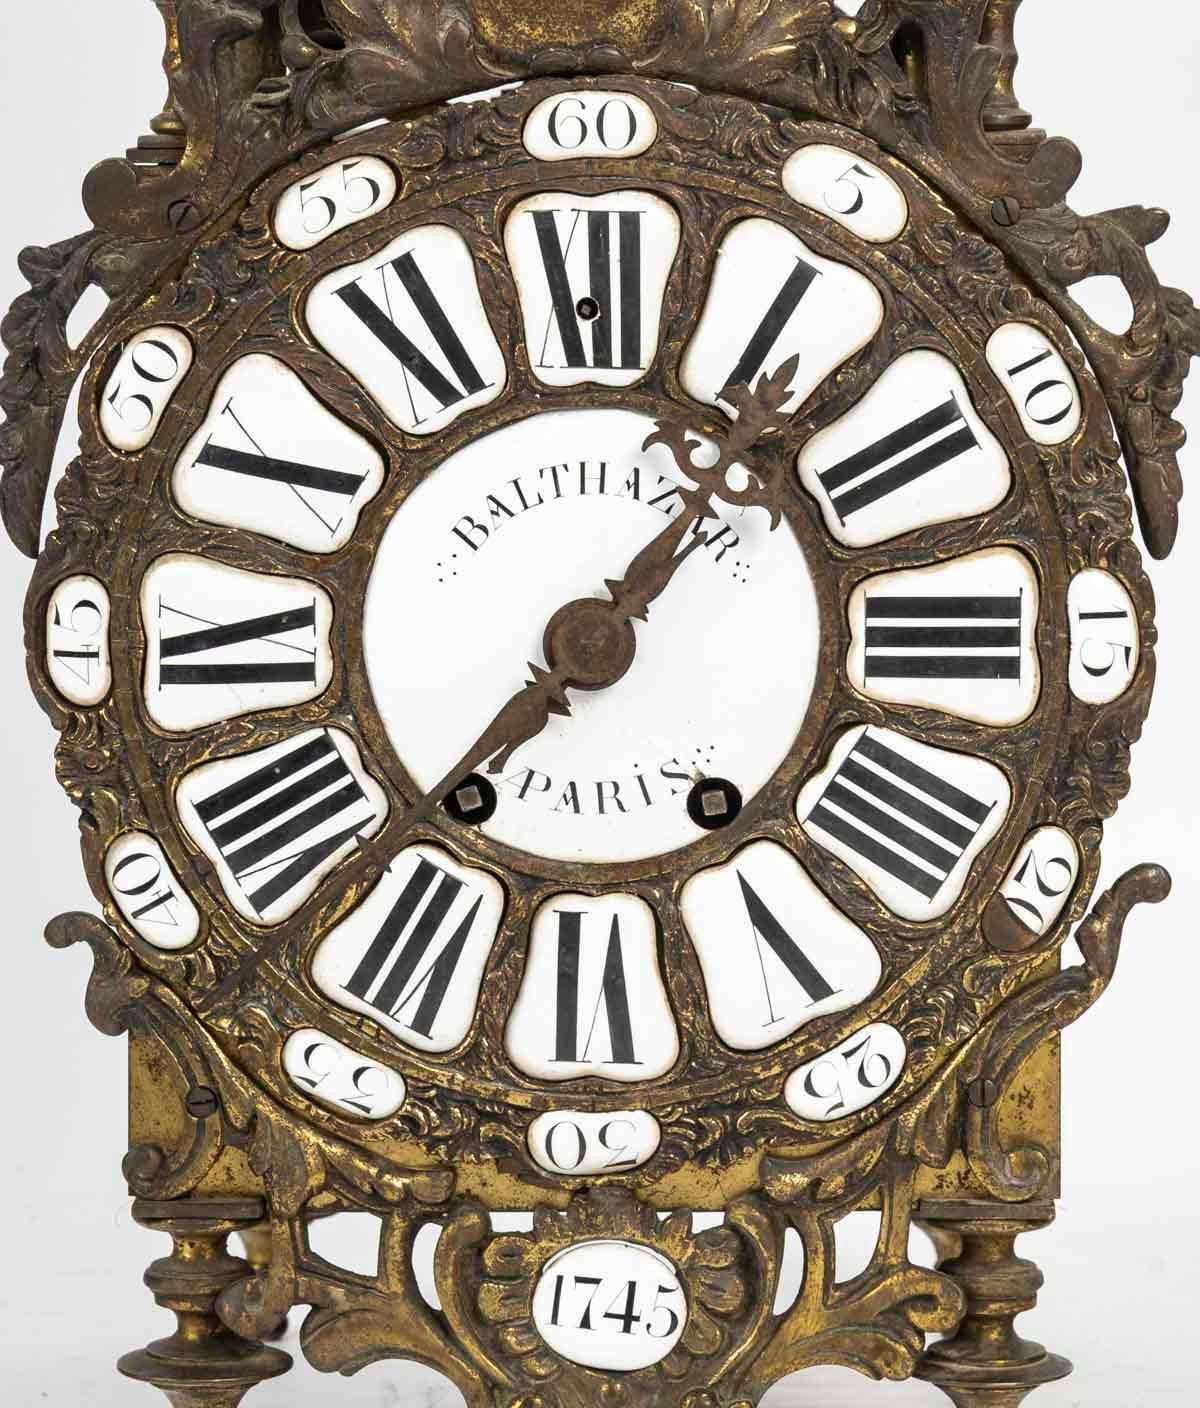 18th century bell clock, mechanism signed by Huy Angers.

Bell clock signed by Balthazar, Paris, 1745, mechanism signed by Huy Angers, 18th century in brass and enamel plate.
H: 51cm, W: 23cm, D: 18cm